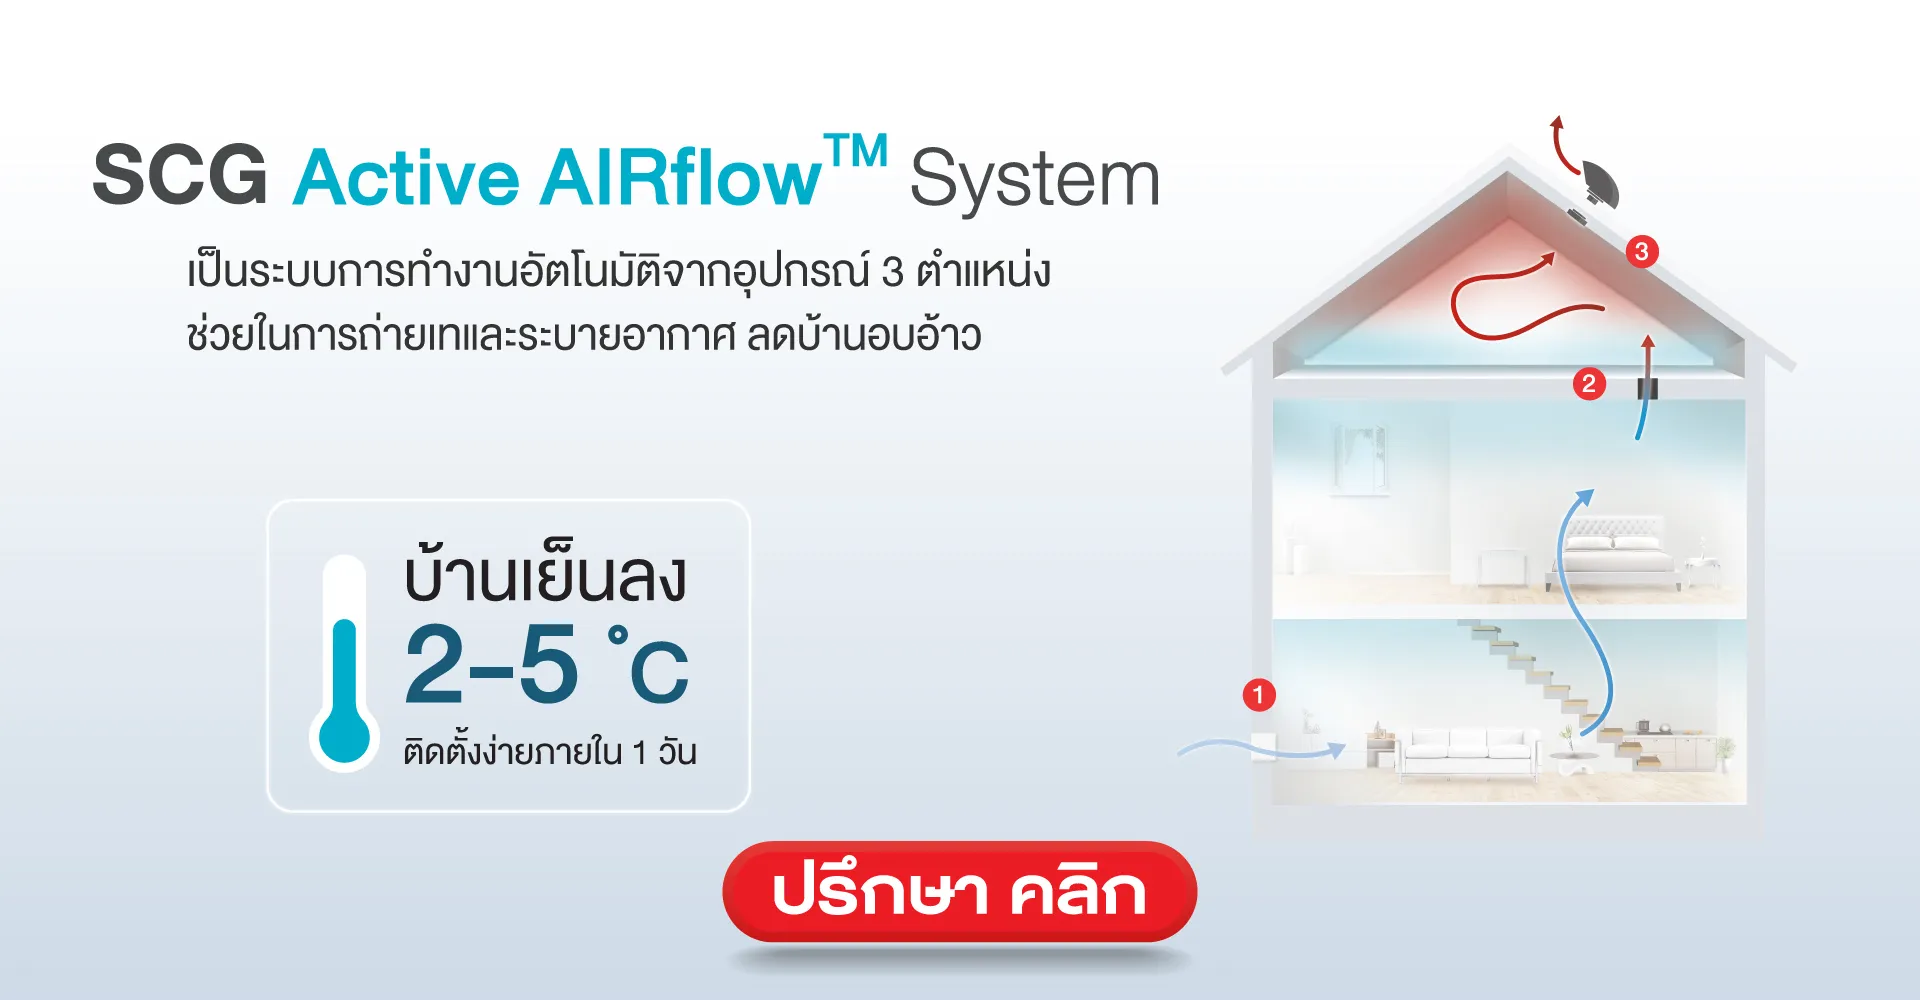 scg active air flow system ระบบถ่ายเทและระบายอากาศ บ้านเย็นสบาย ไม่อบอ้าว